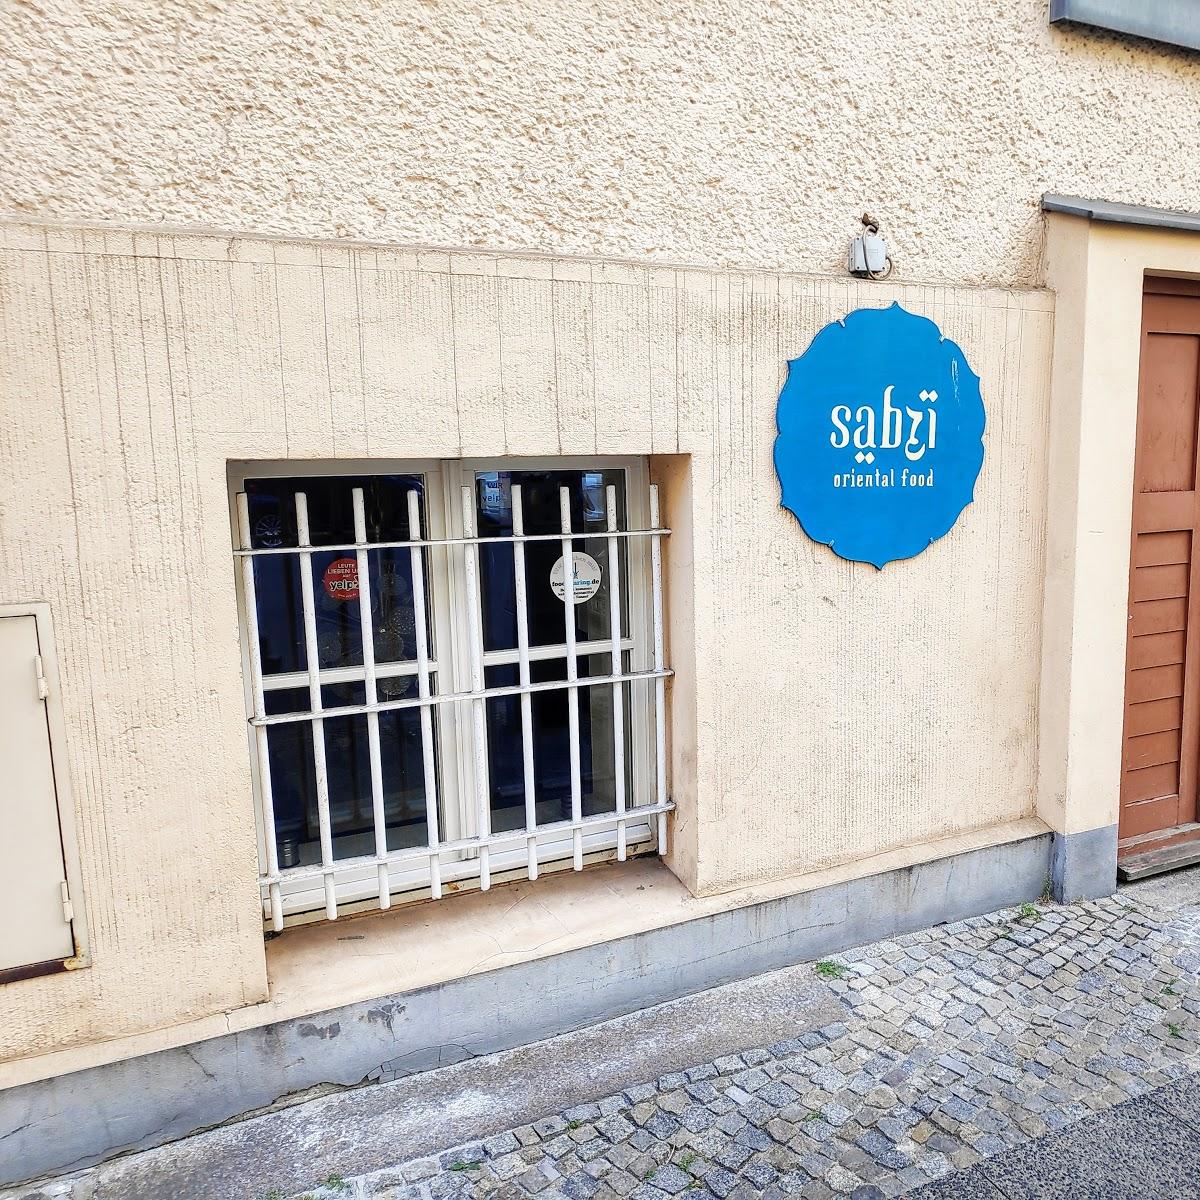 Restaurant "Sabzi" in Berlin